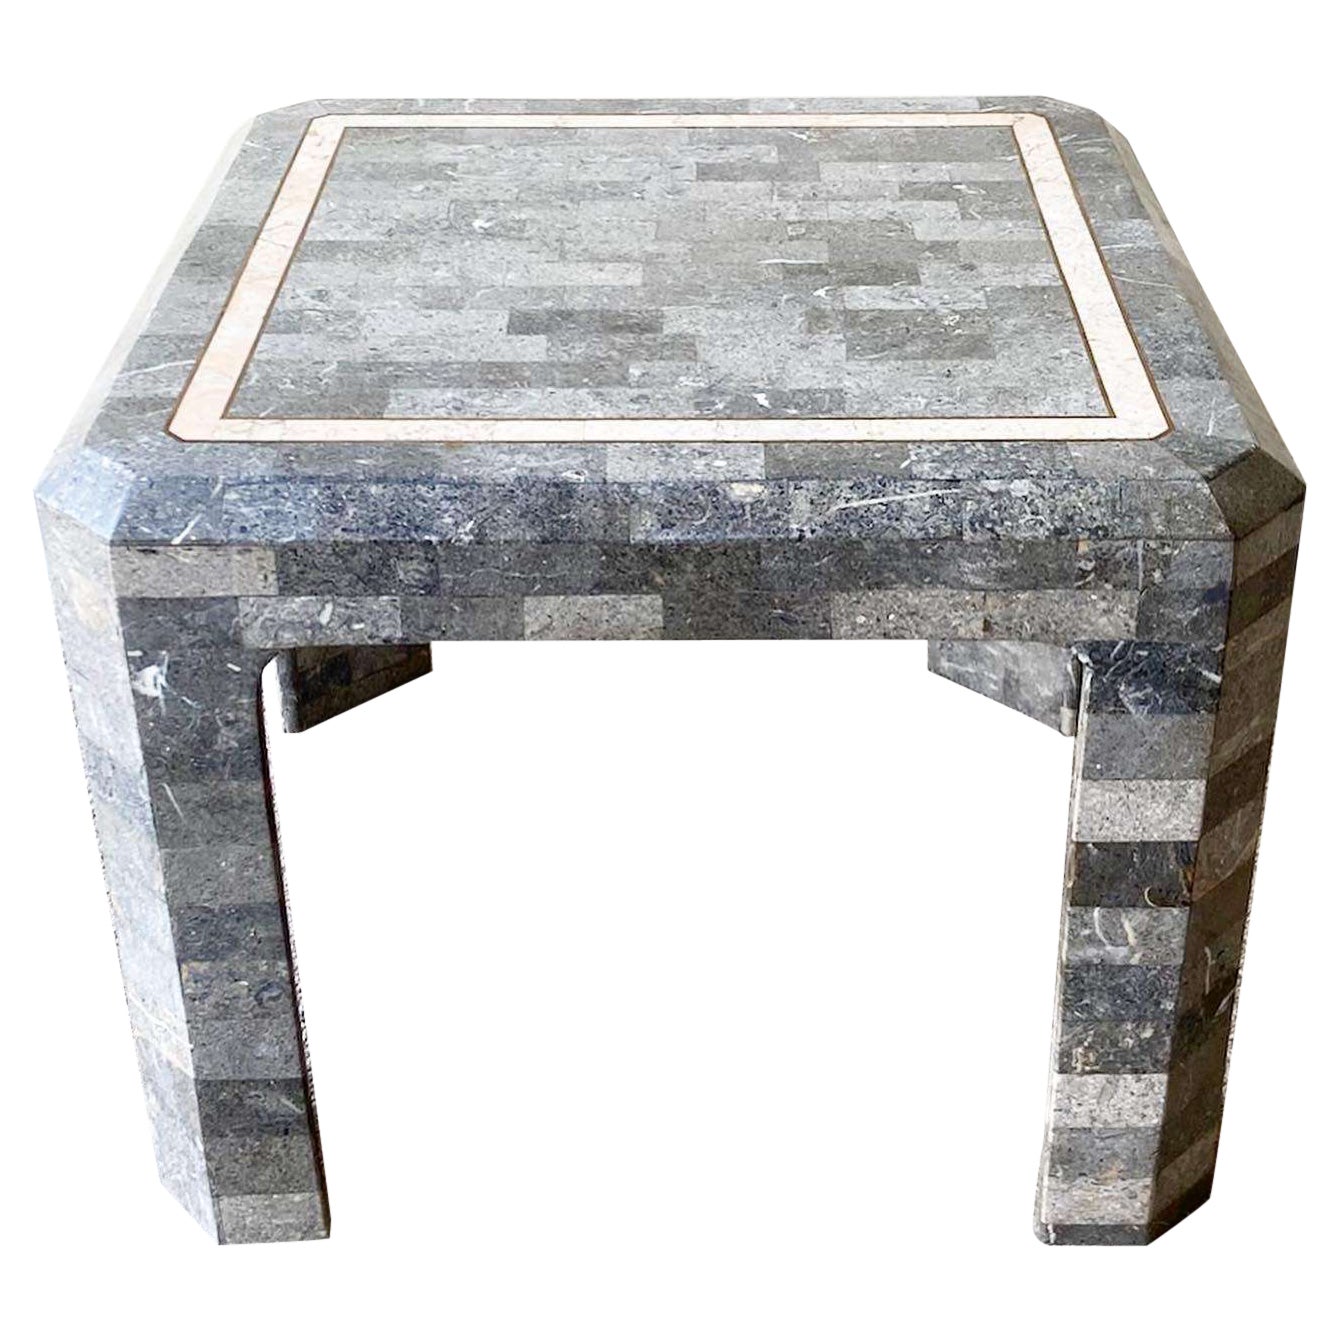 Table d'appoint postmoderne en pierre tesselée anthracite